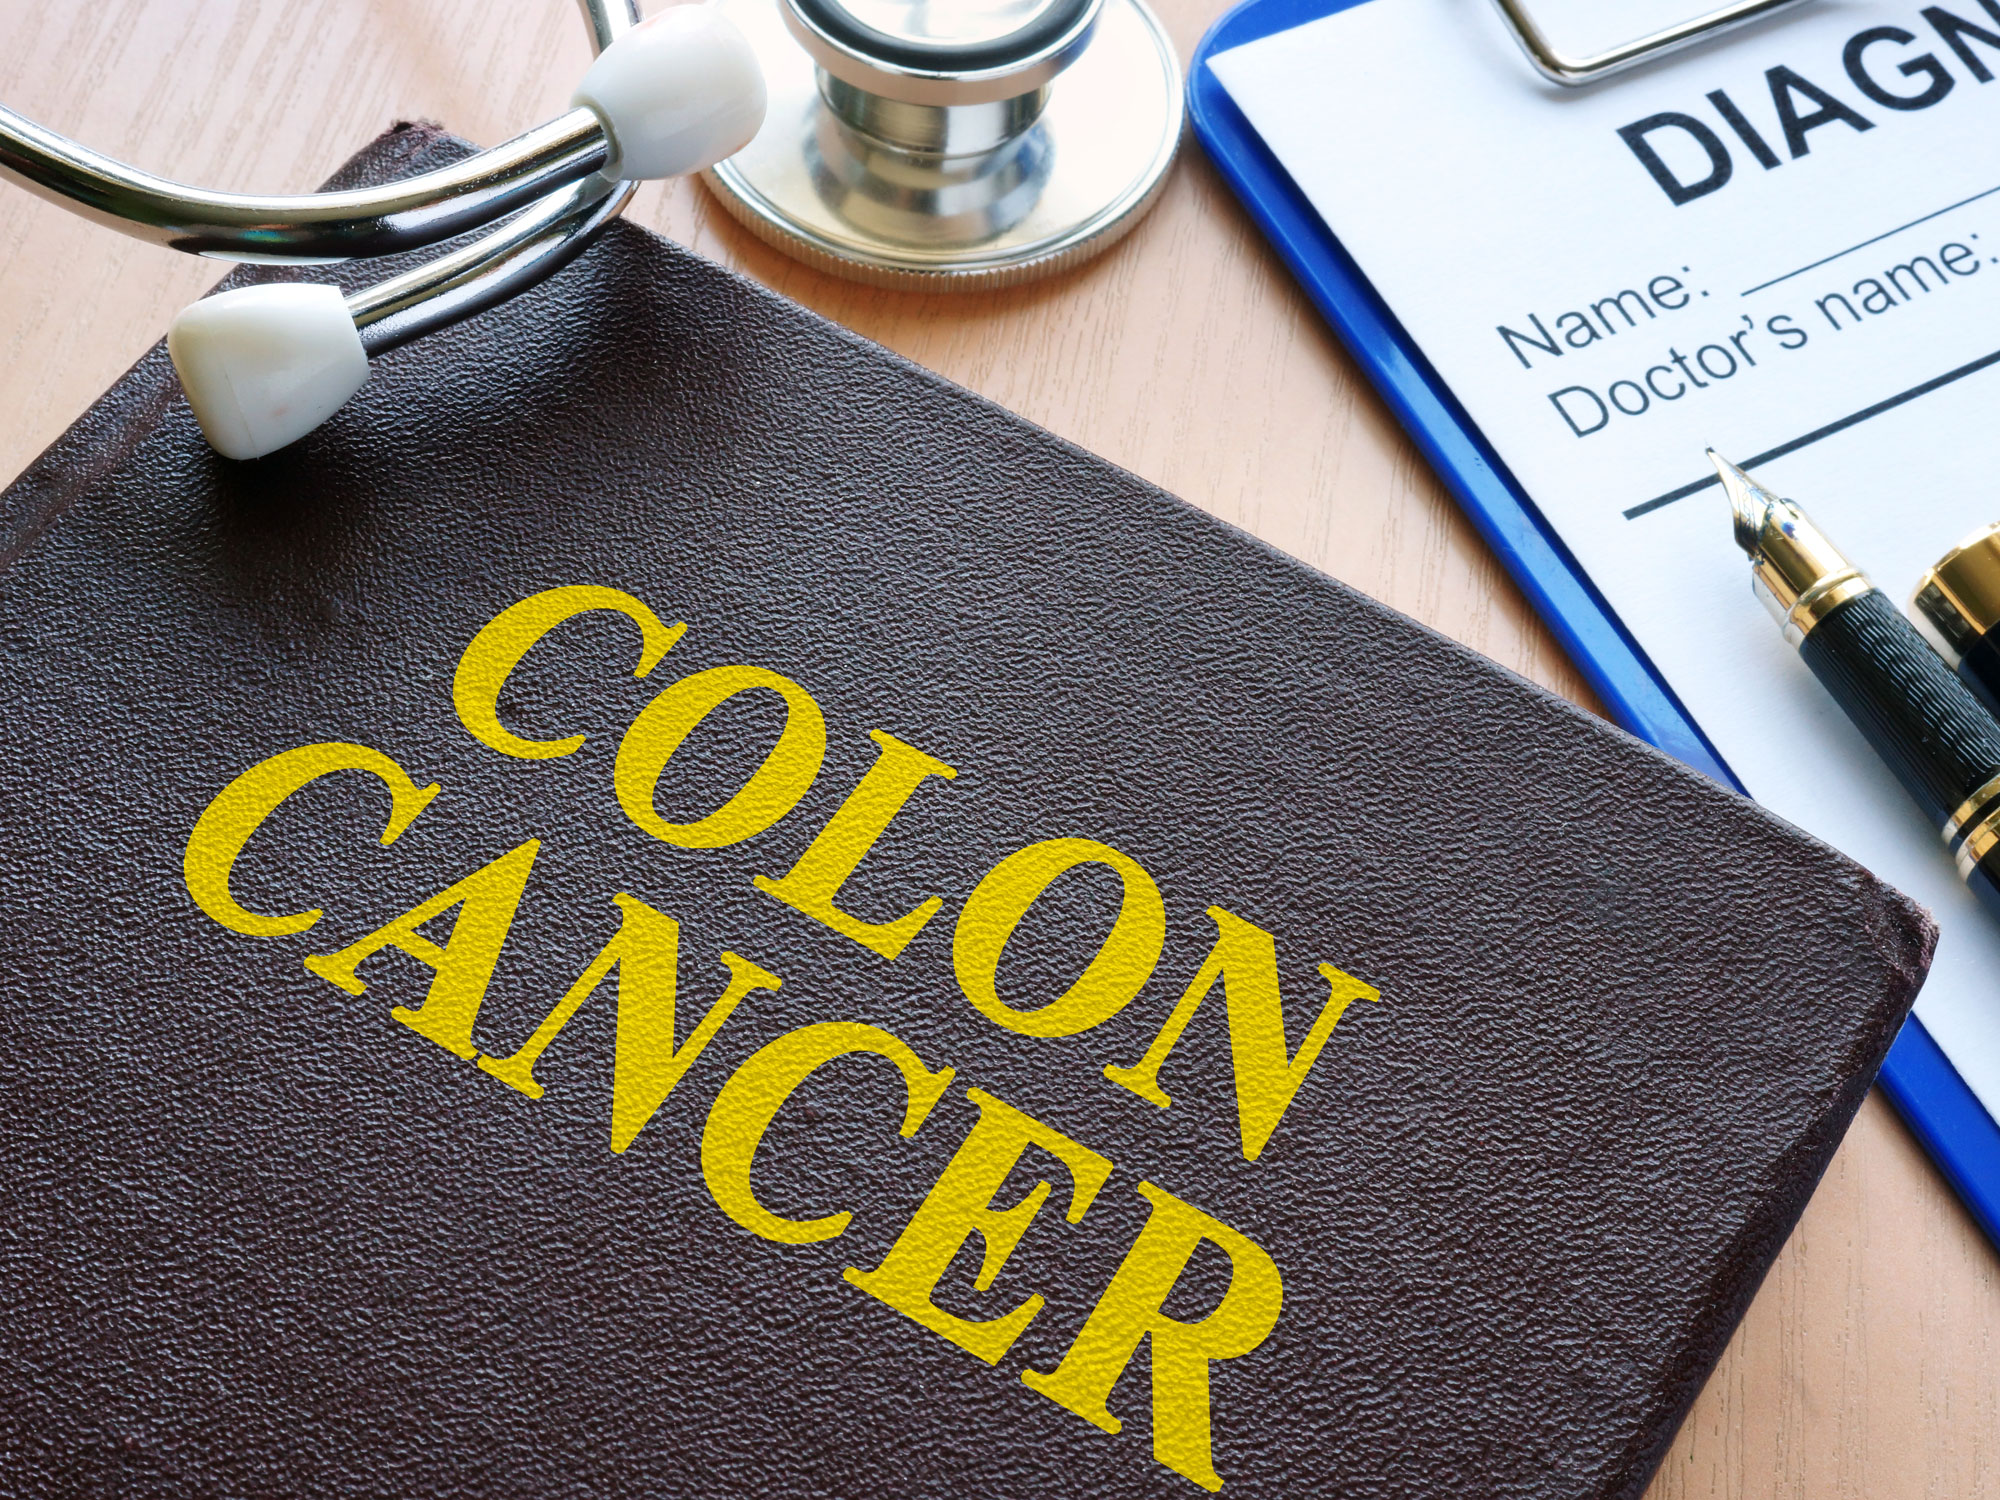 The new promising prescription for colon cancer